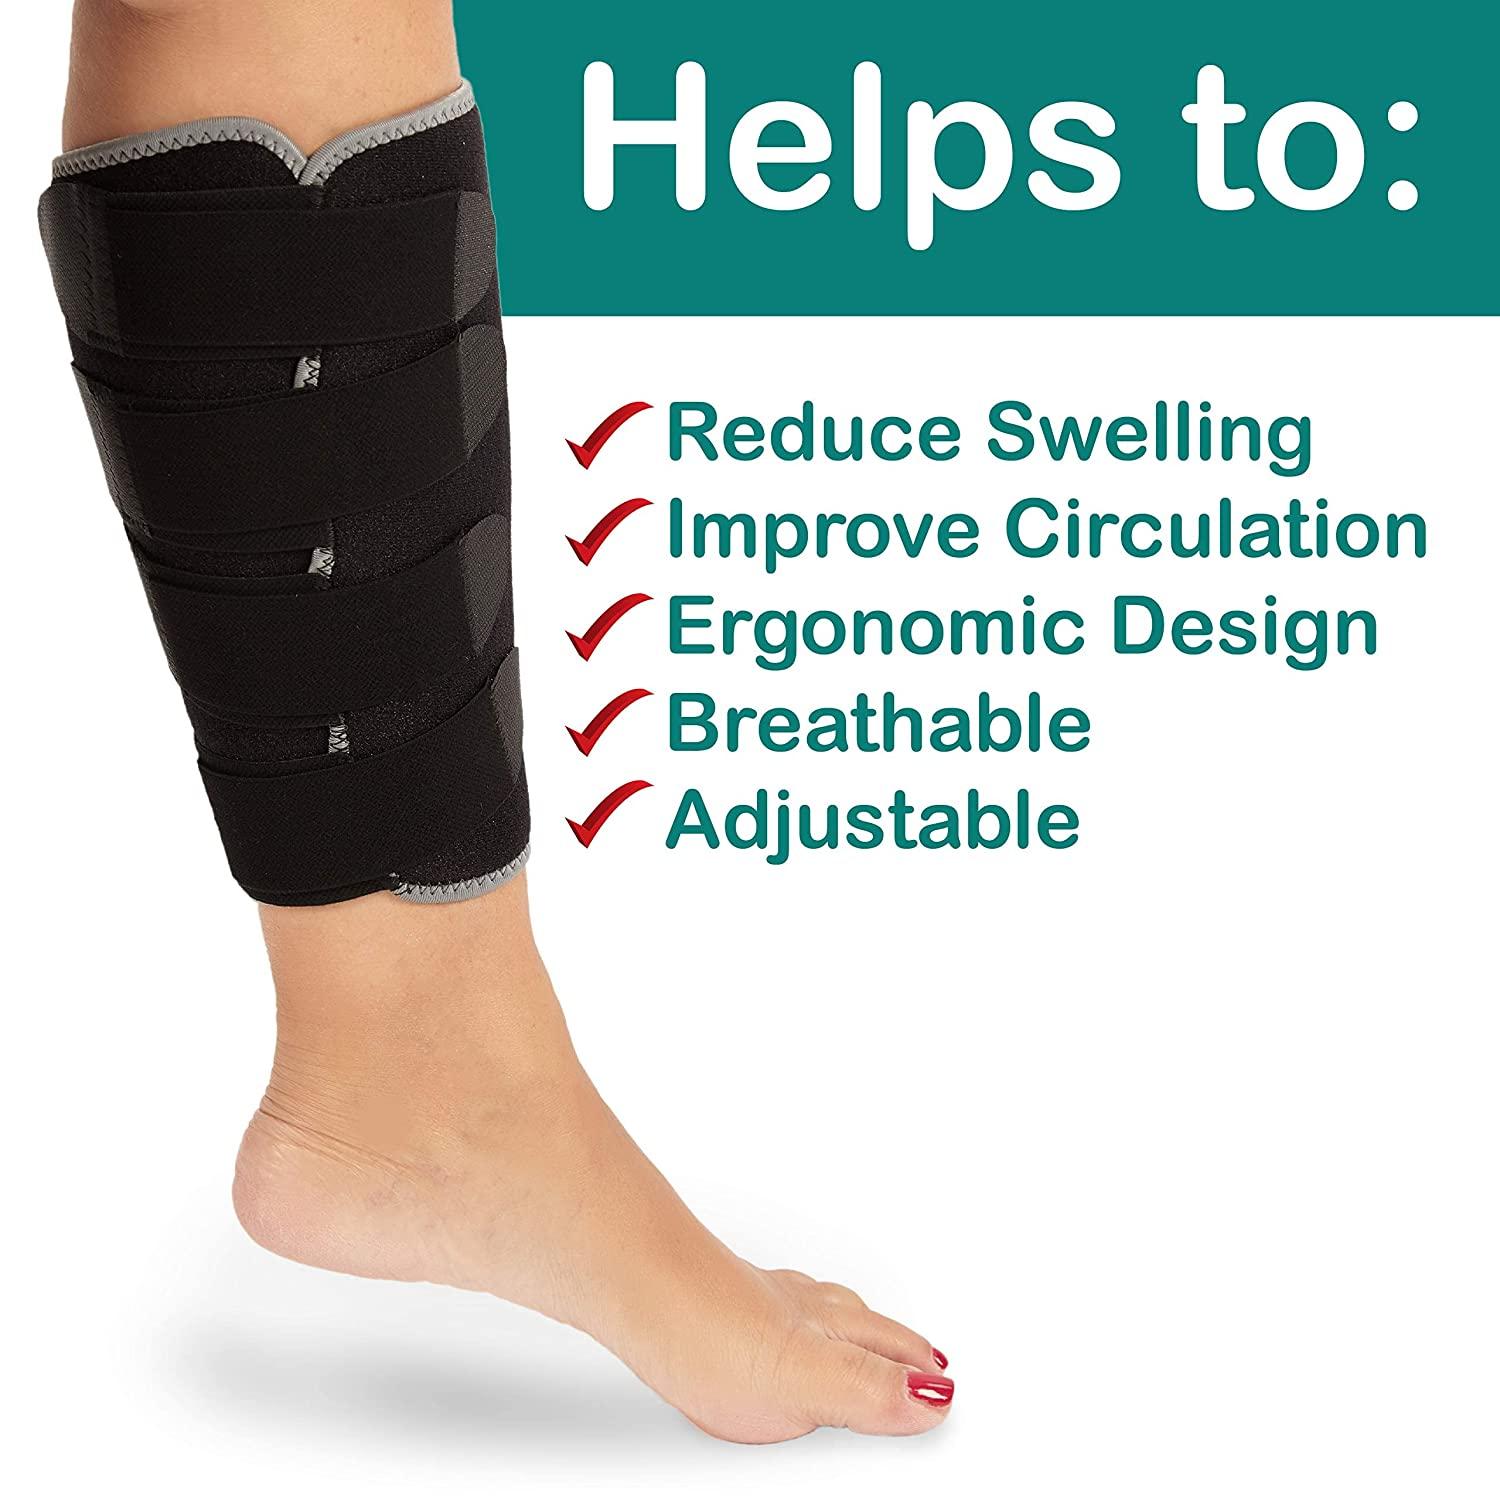 1Pcs Calf Compression Sleeve for Men, Women - Helps Shin Splint